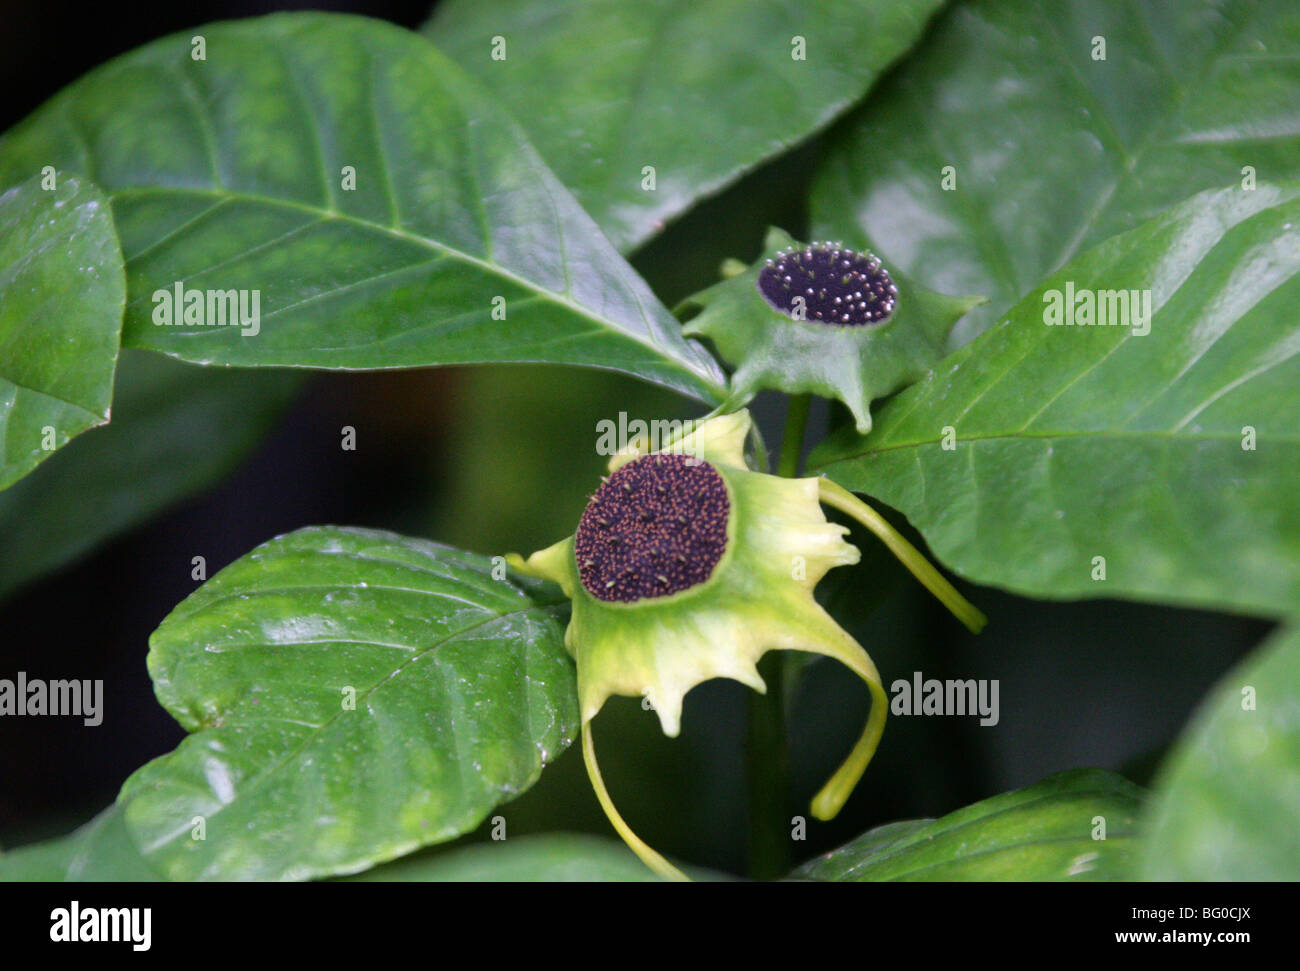 Dorstenia barteri var. multiradiata, Moraceae, West Africa Stock Photo